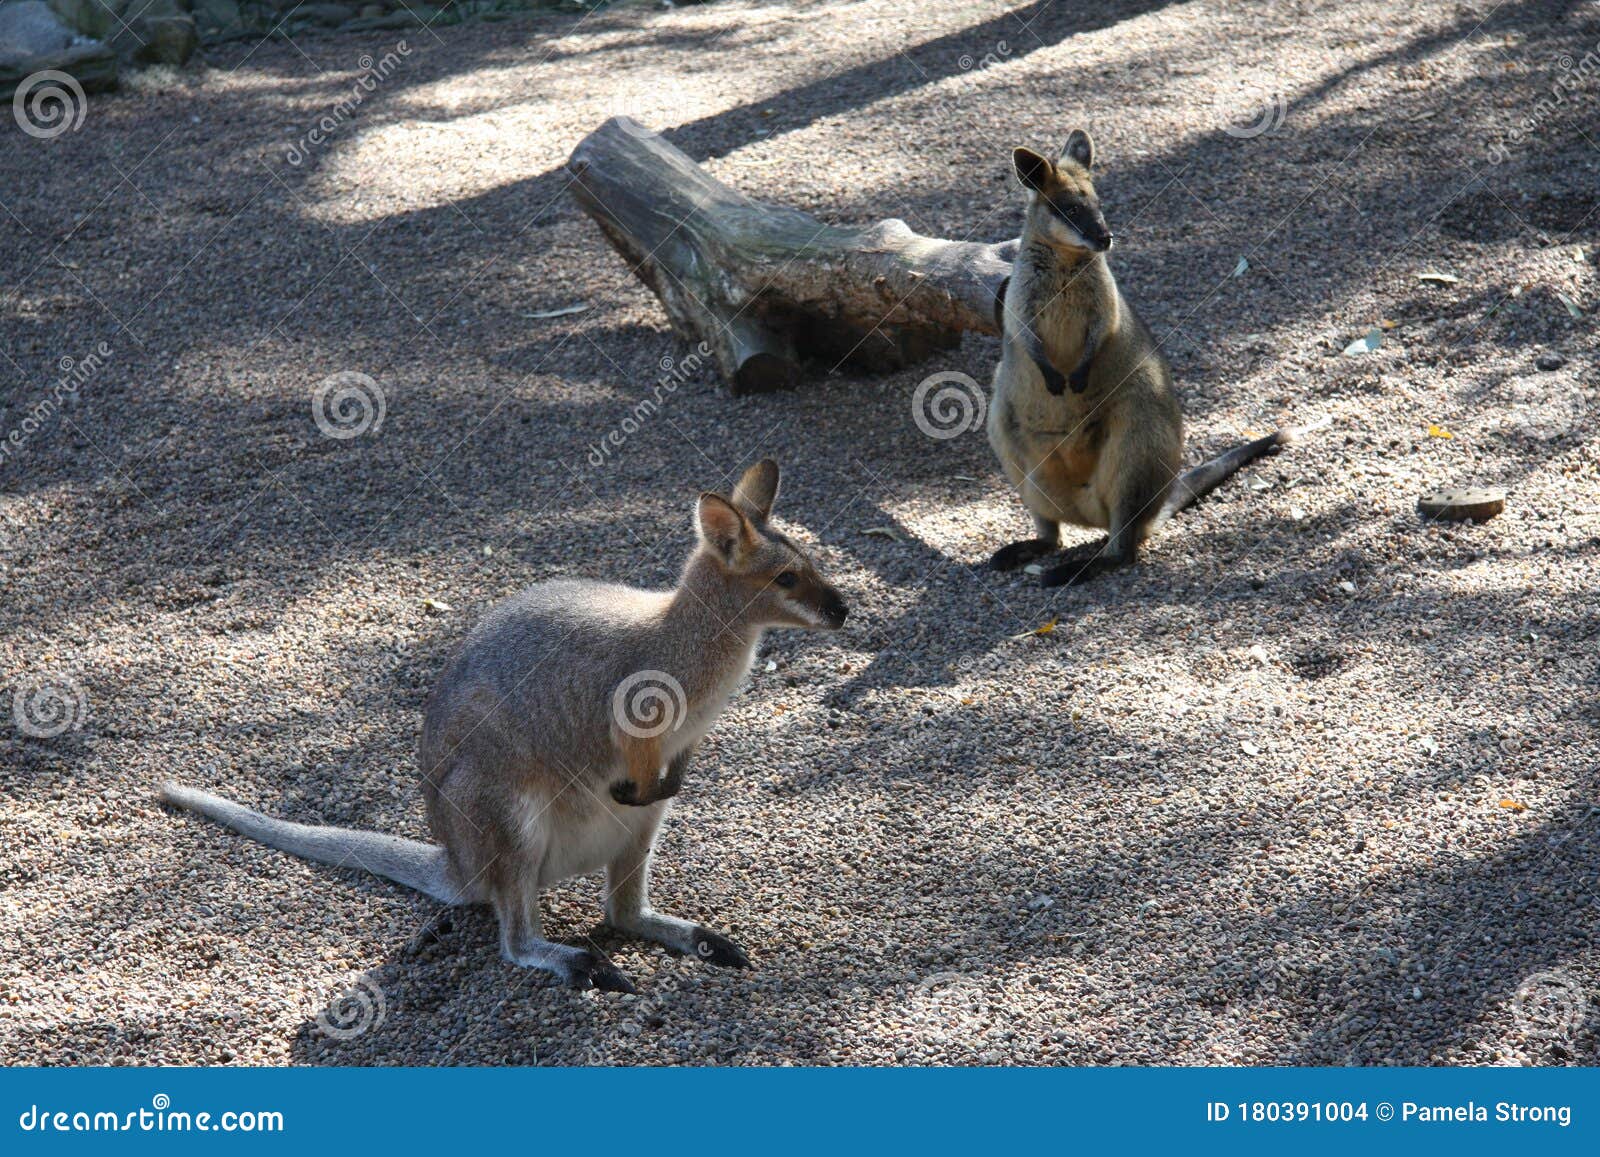 Magnificent Australian Wild Life Animals Stock Photo - Image of  magnificent, suburbia: 180391004